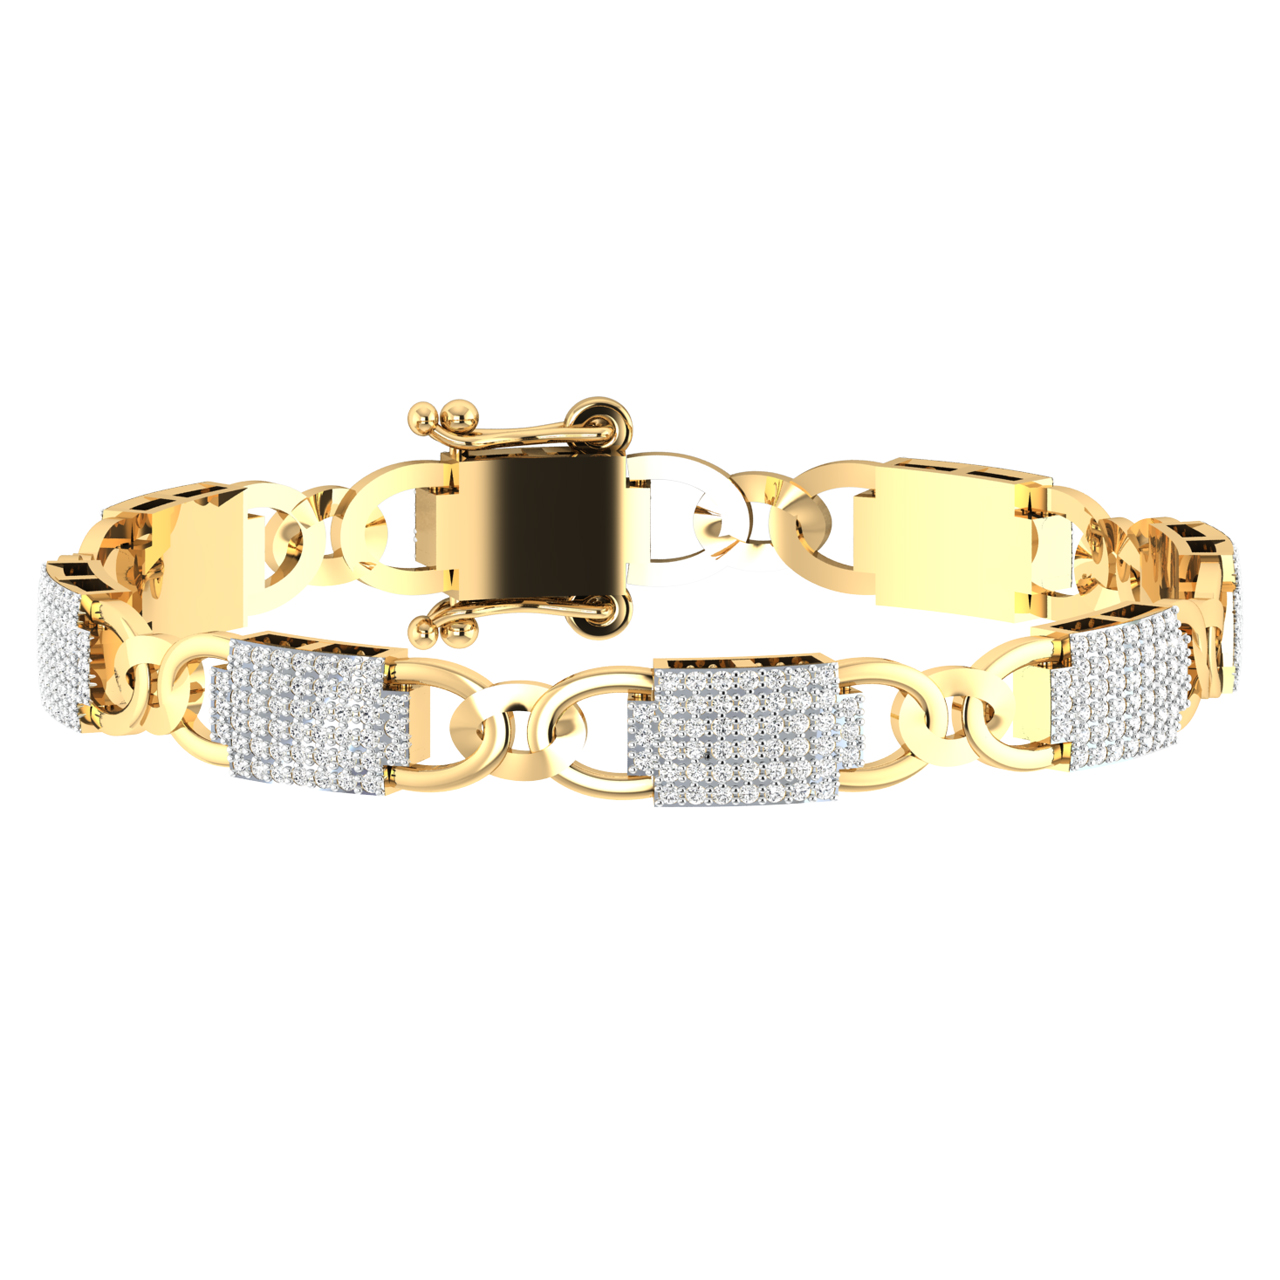 Buy Gold Stainless Steel Diamond Cut Curb Chain Bracelet Online - Inox Jewelry  India